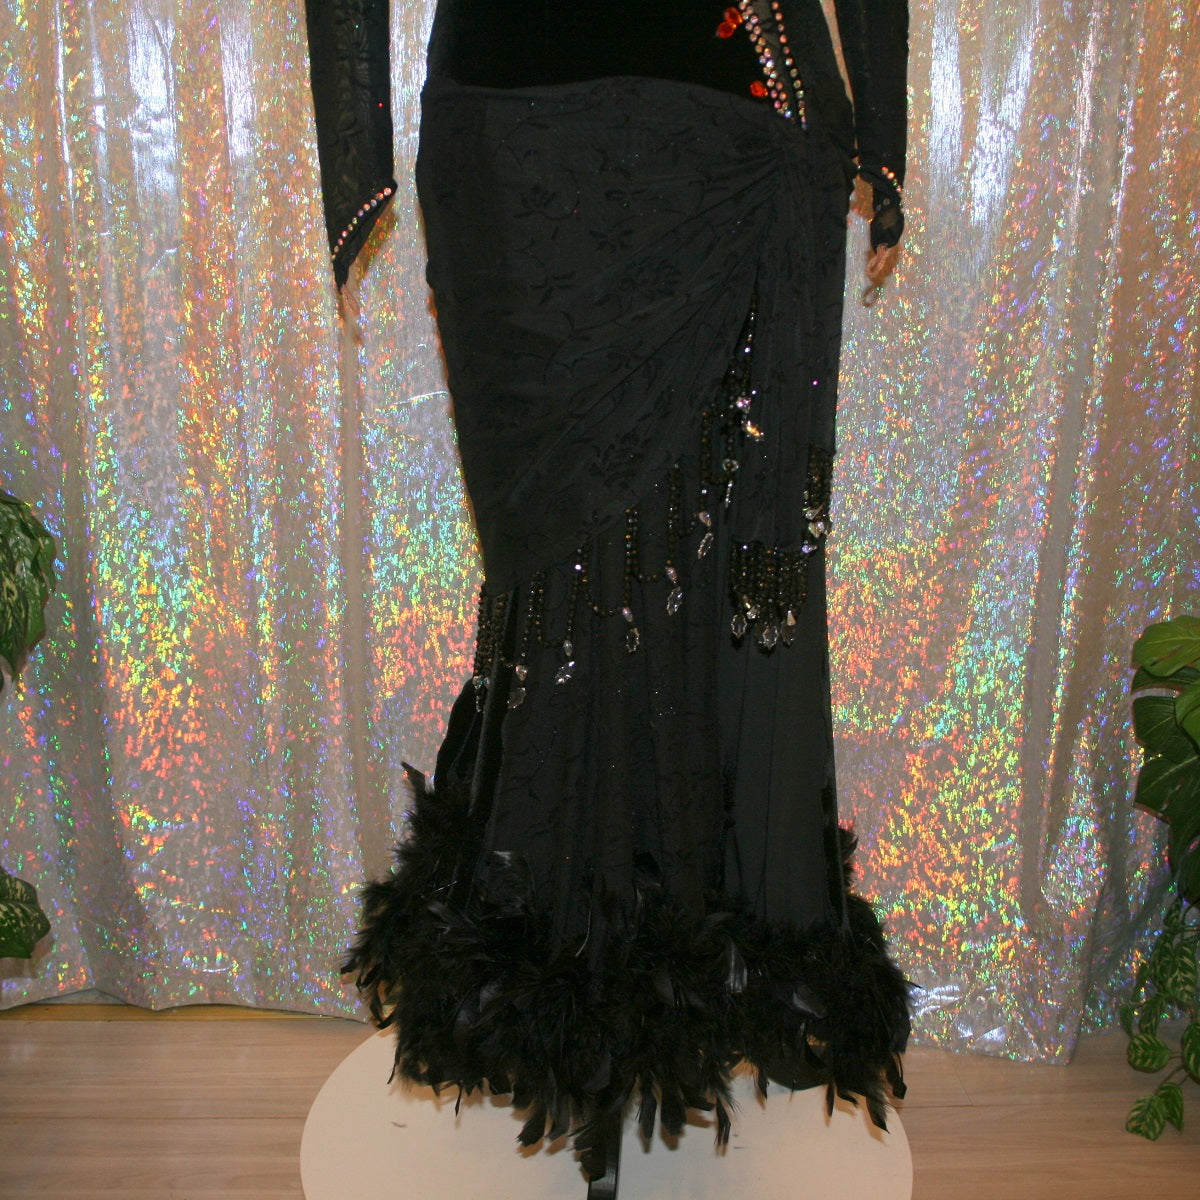 Black Ballroom Dress with Orange Accents & Black Feathers on Sale-Contessa